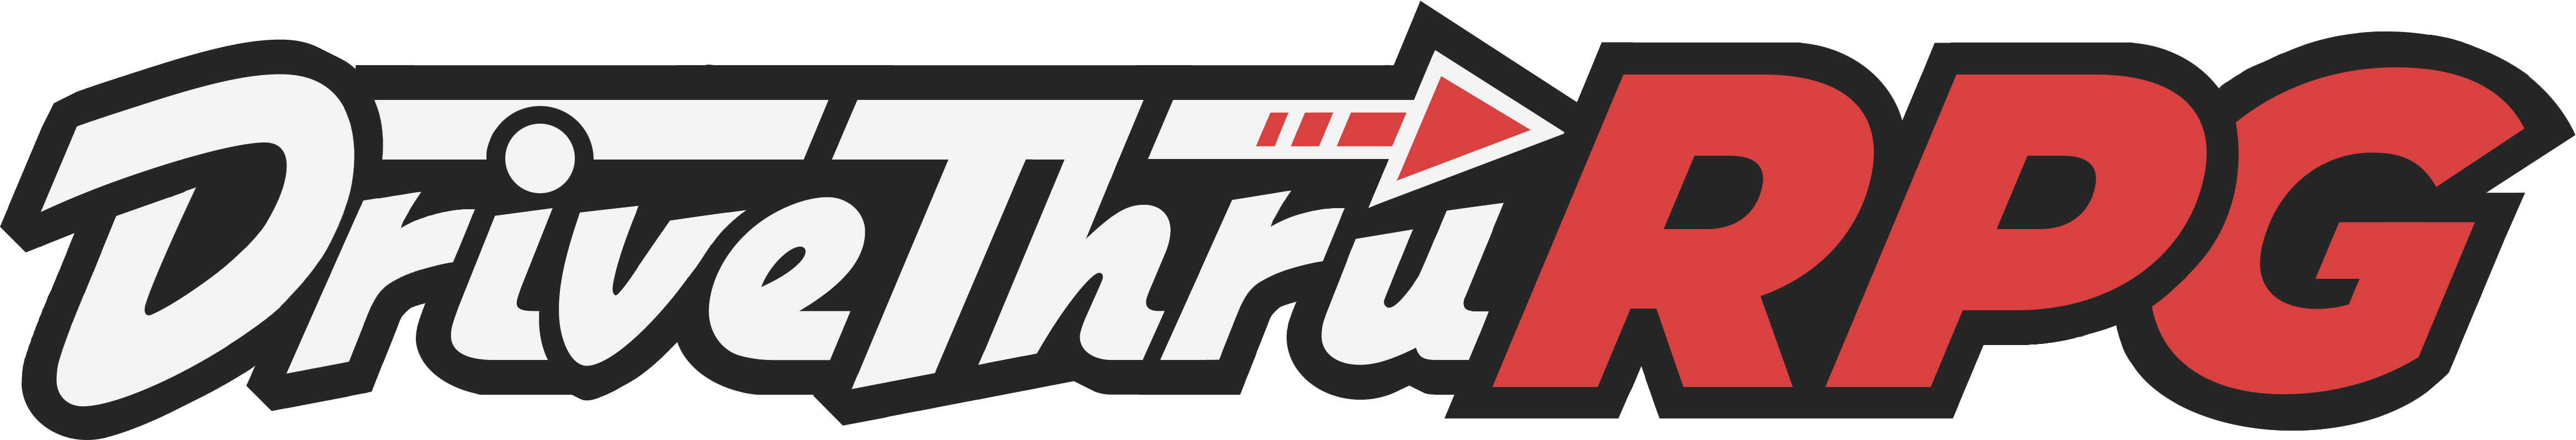 drivethrurpg-logo.png